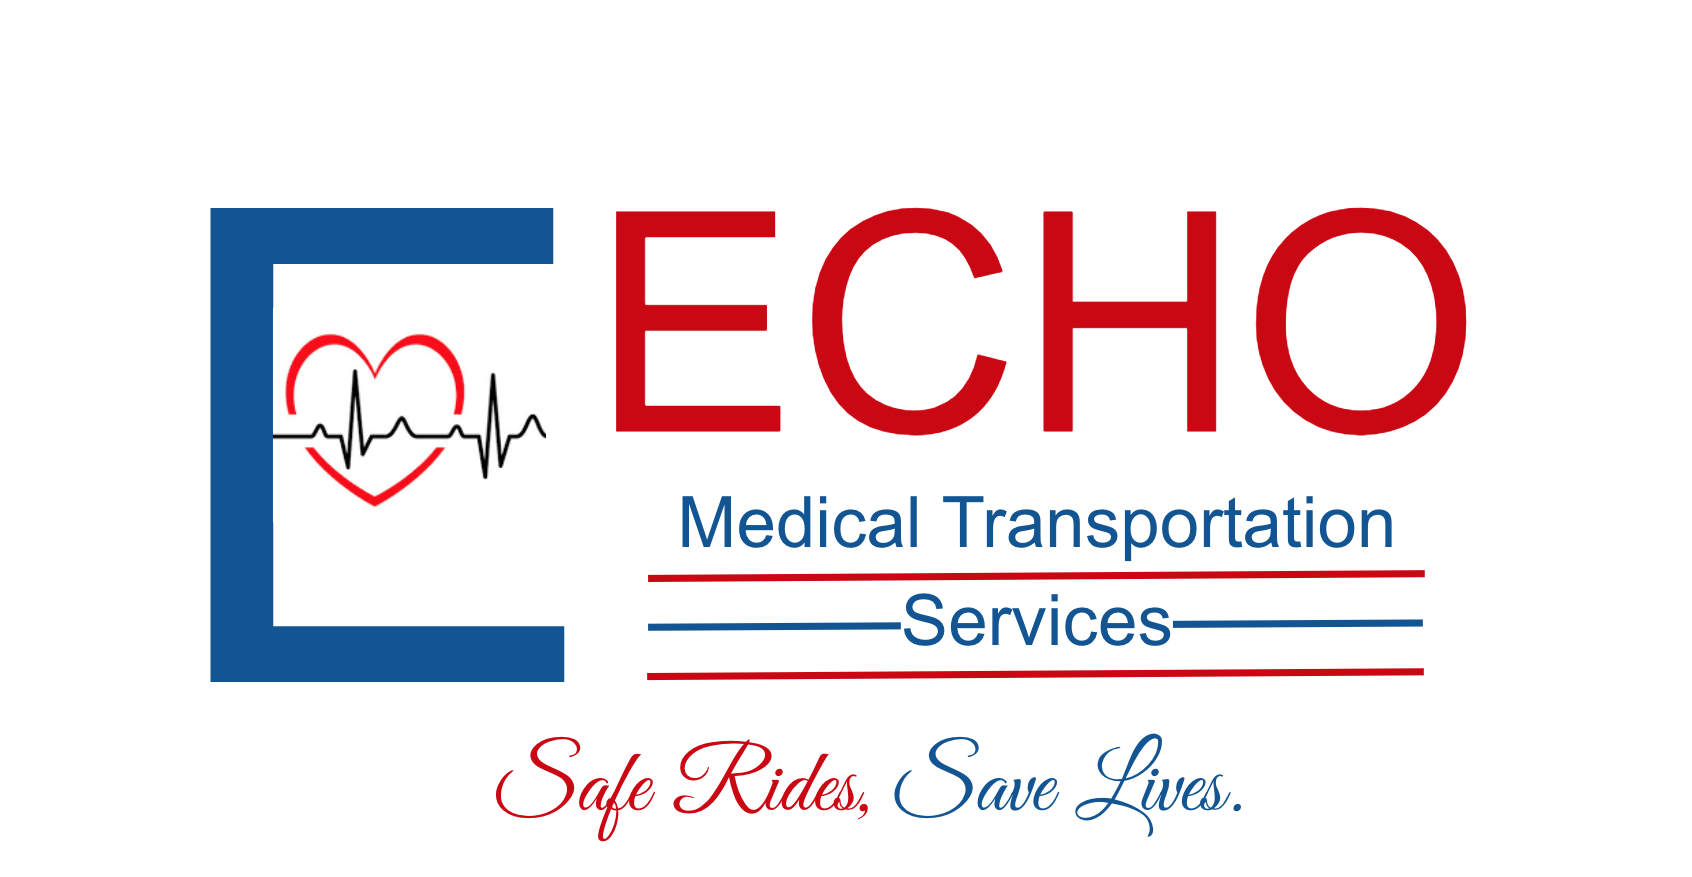 ECHO MEDICAL TRANSPORTATION SERVICES